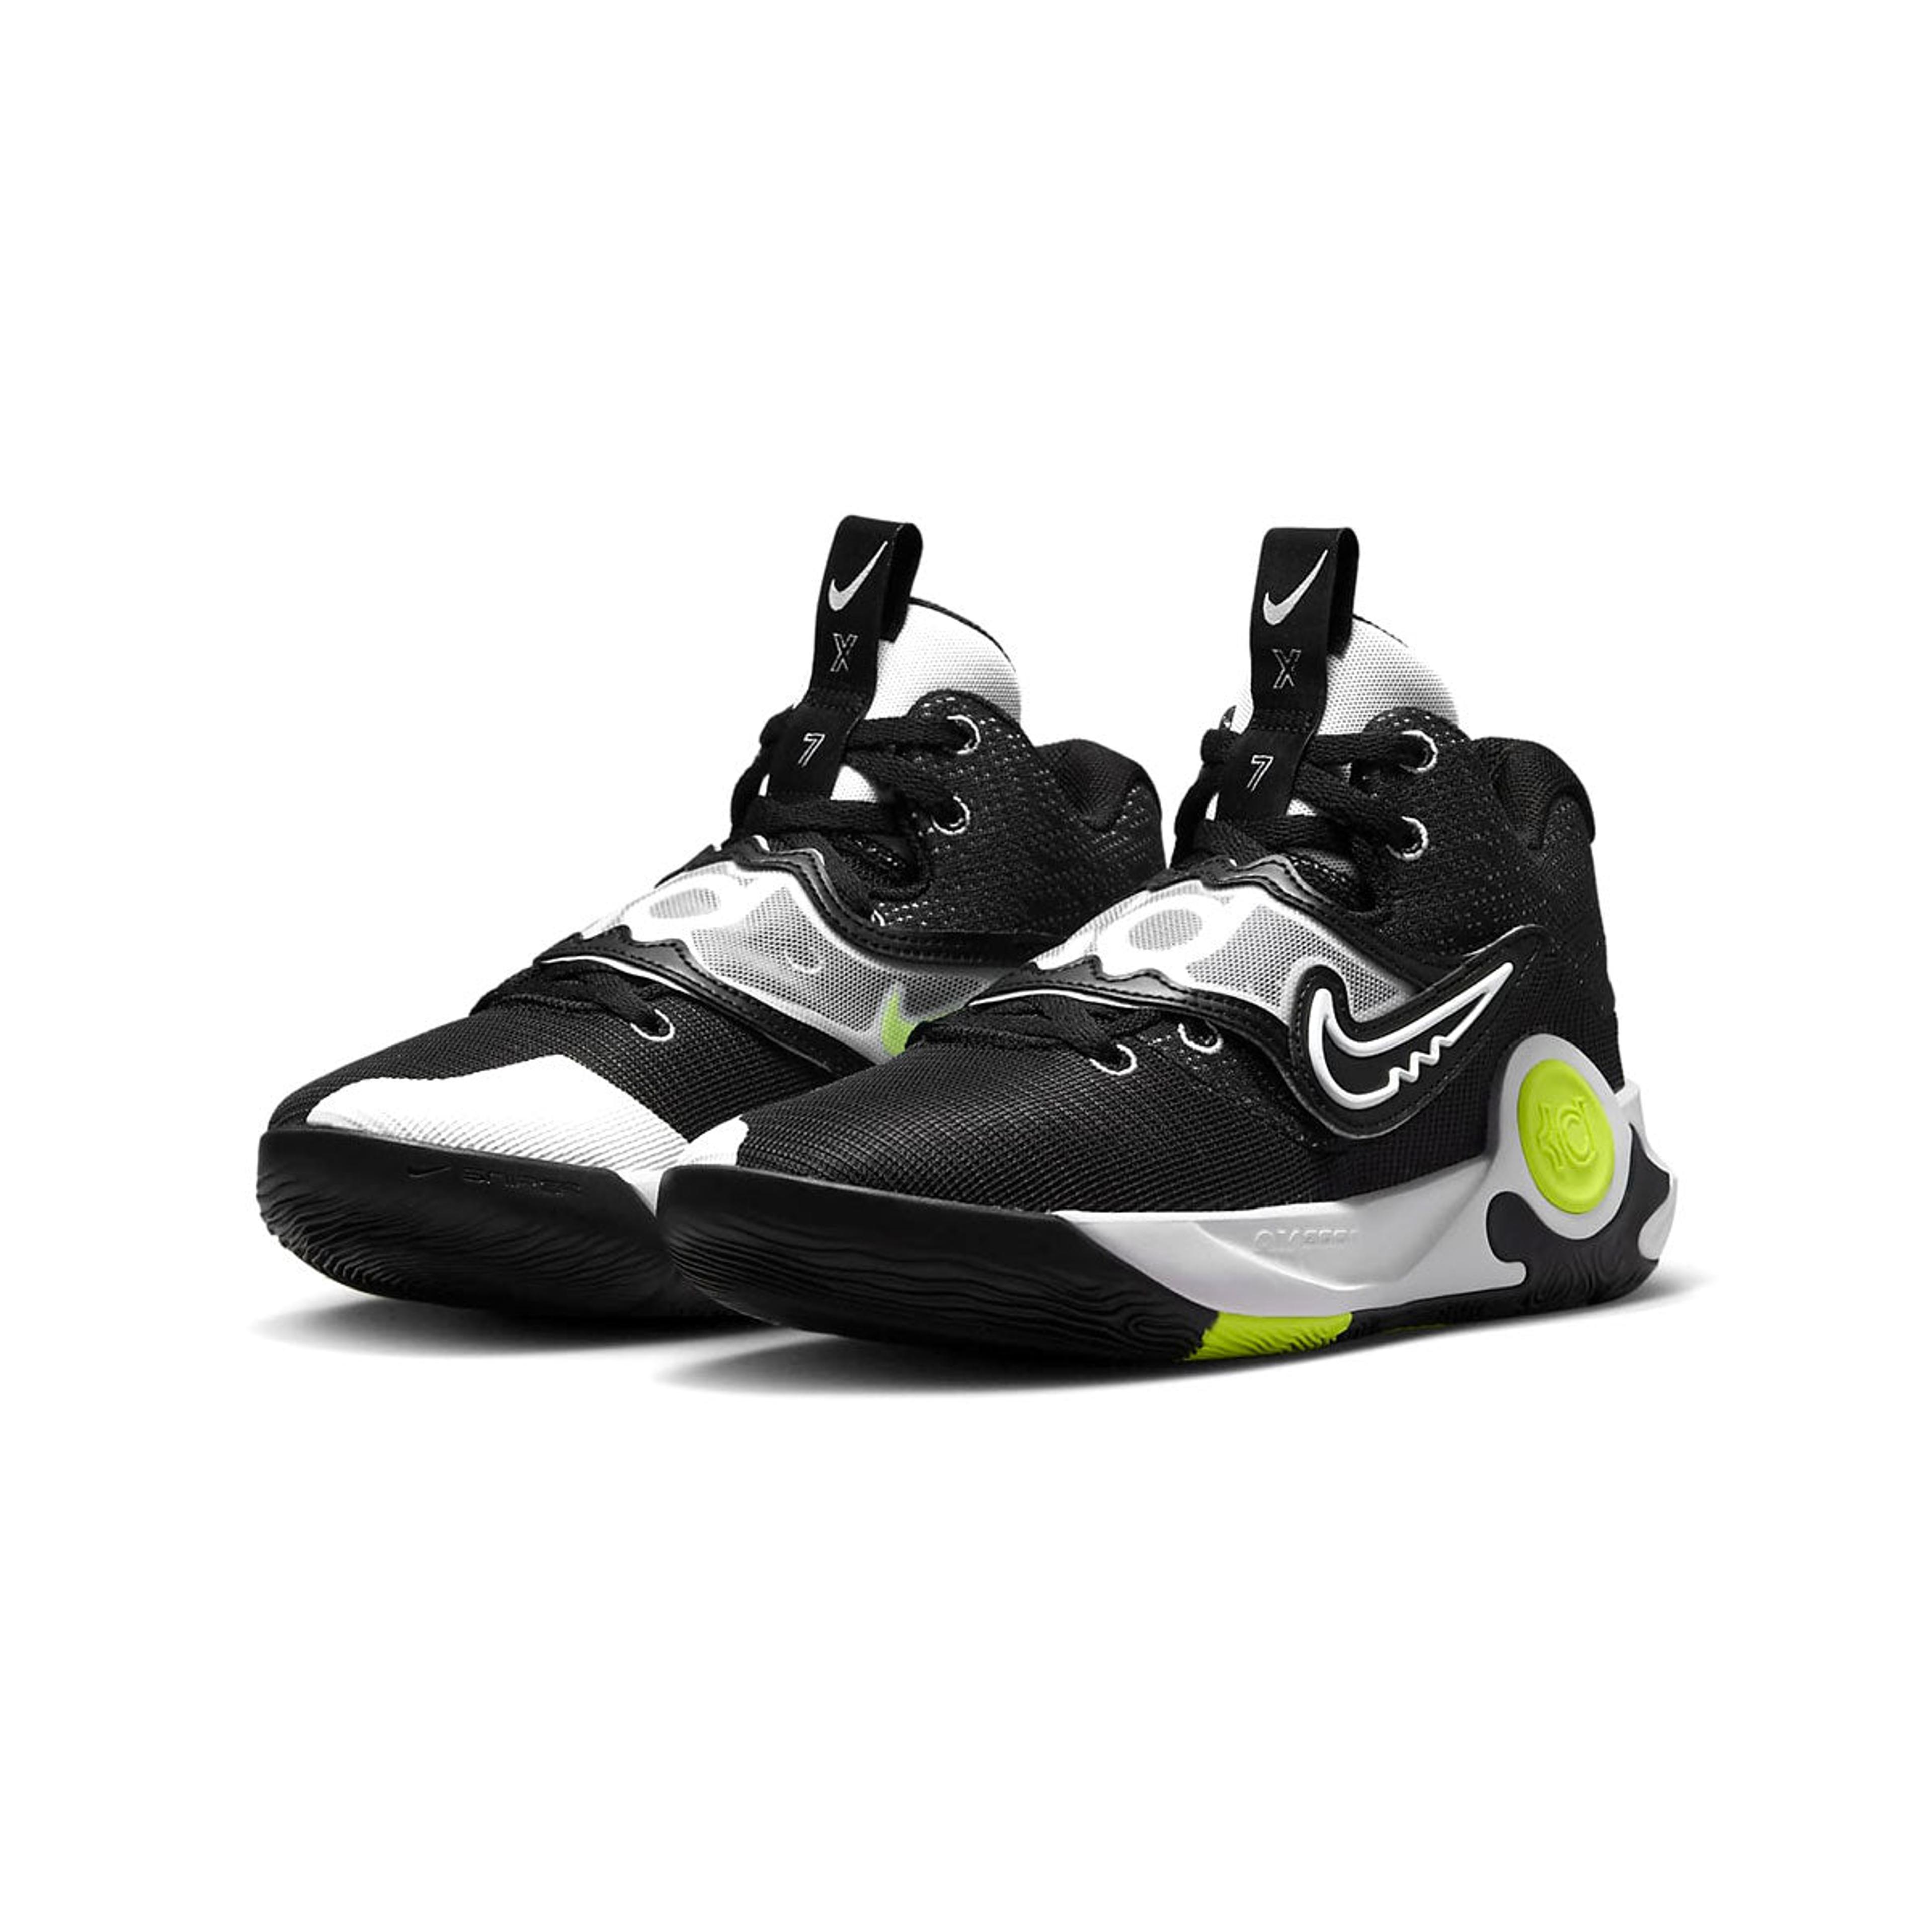 Alternate View 4 of Nike Men's KD Trey 5 X Black Volt White